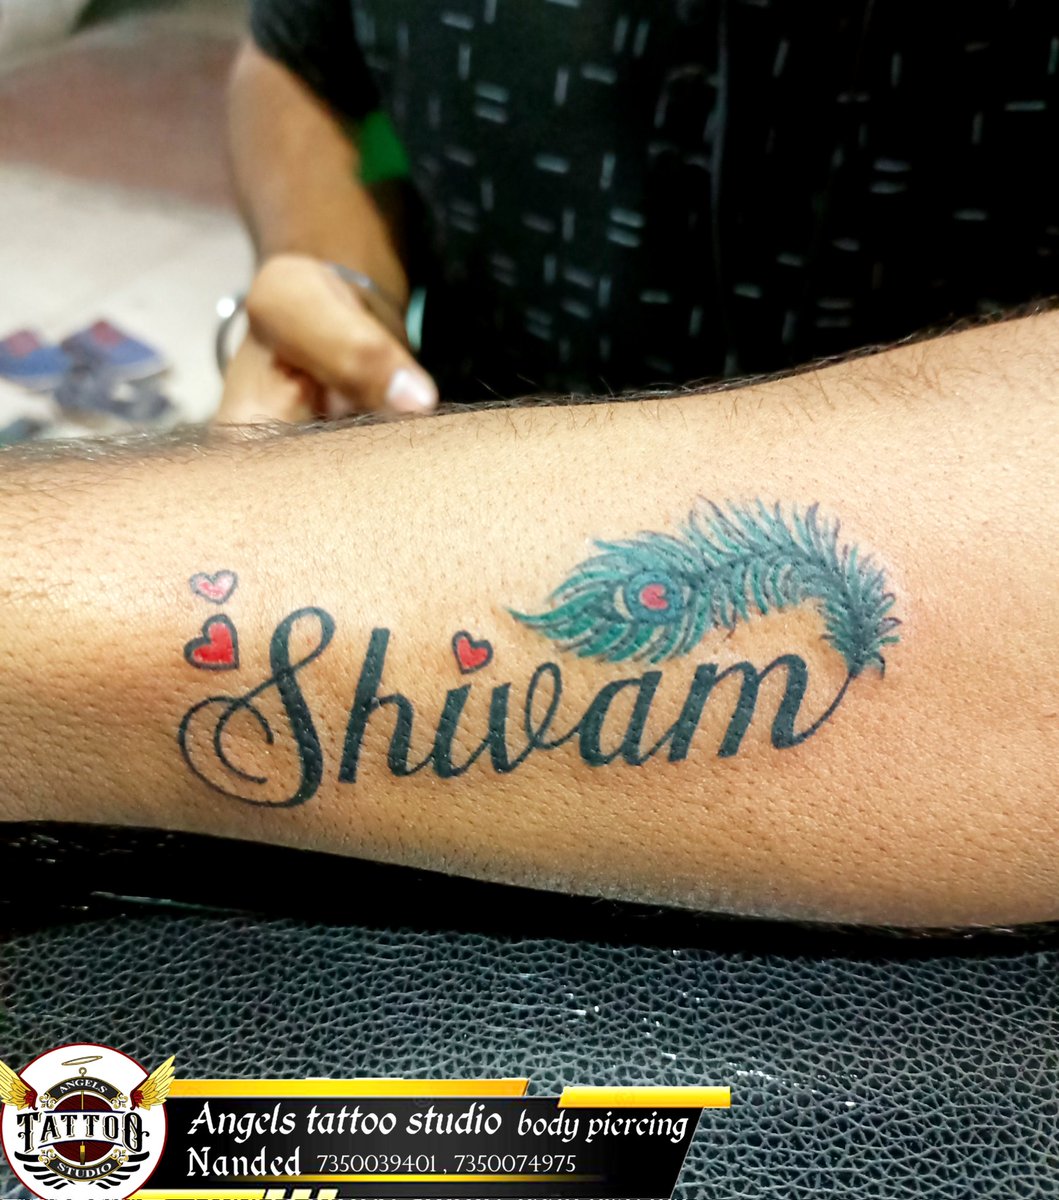 Tattoo Design कस टट बनवए इन डजइन स लजए आइडय  tattoo design  ideas  Navbharat Times